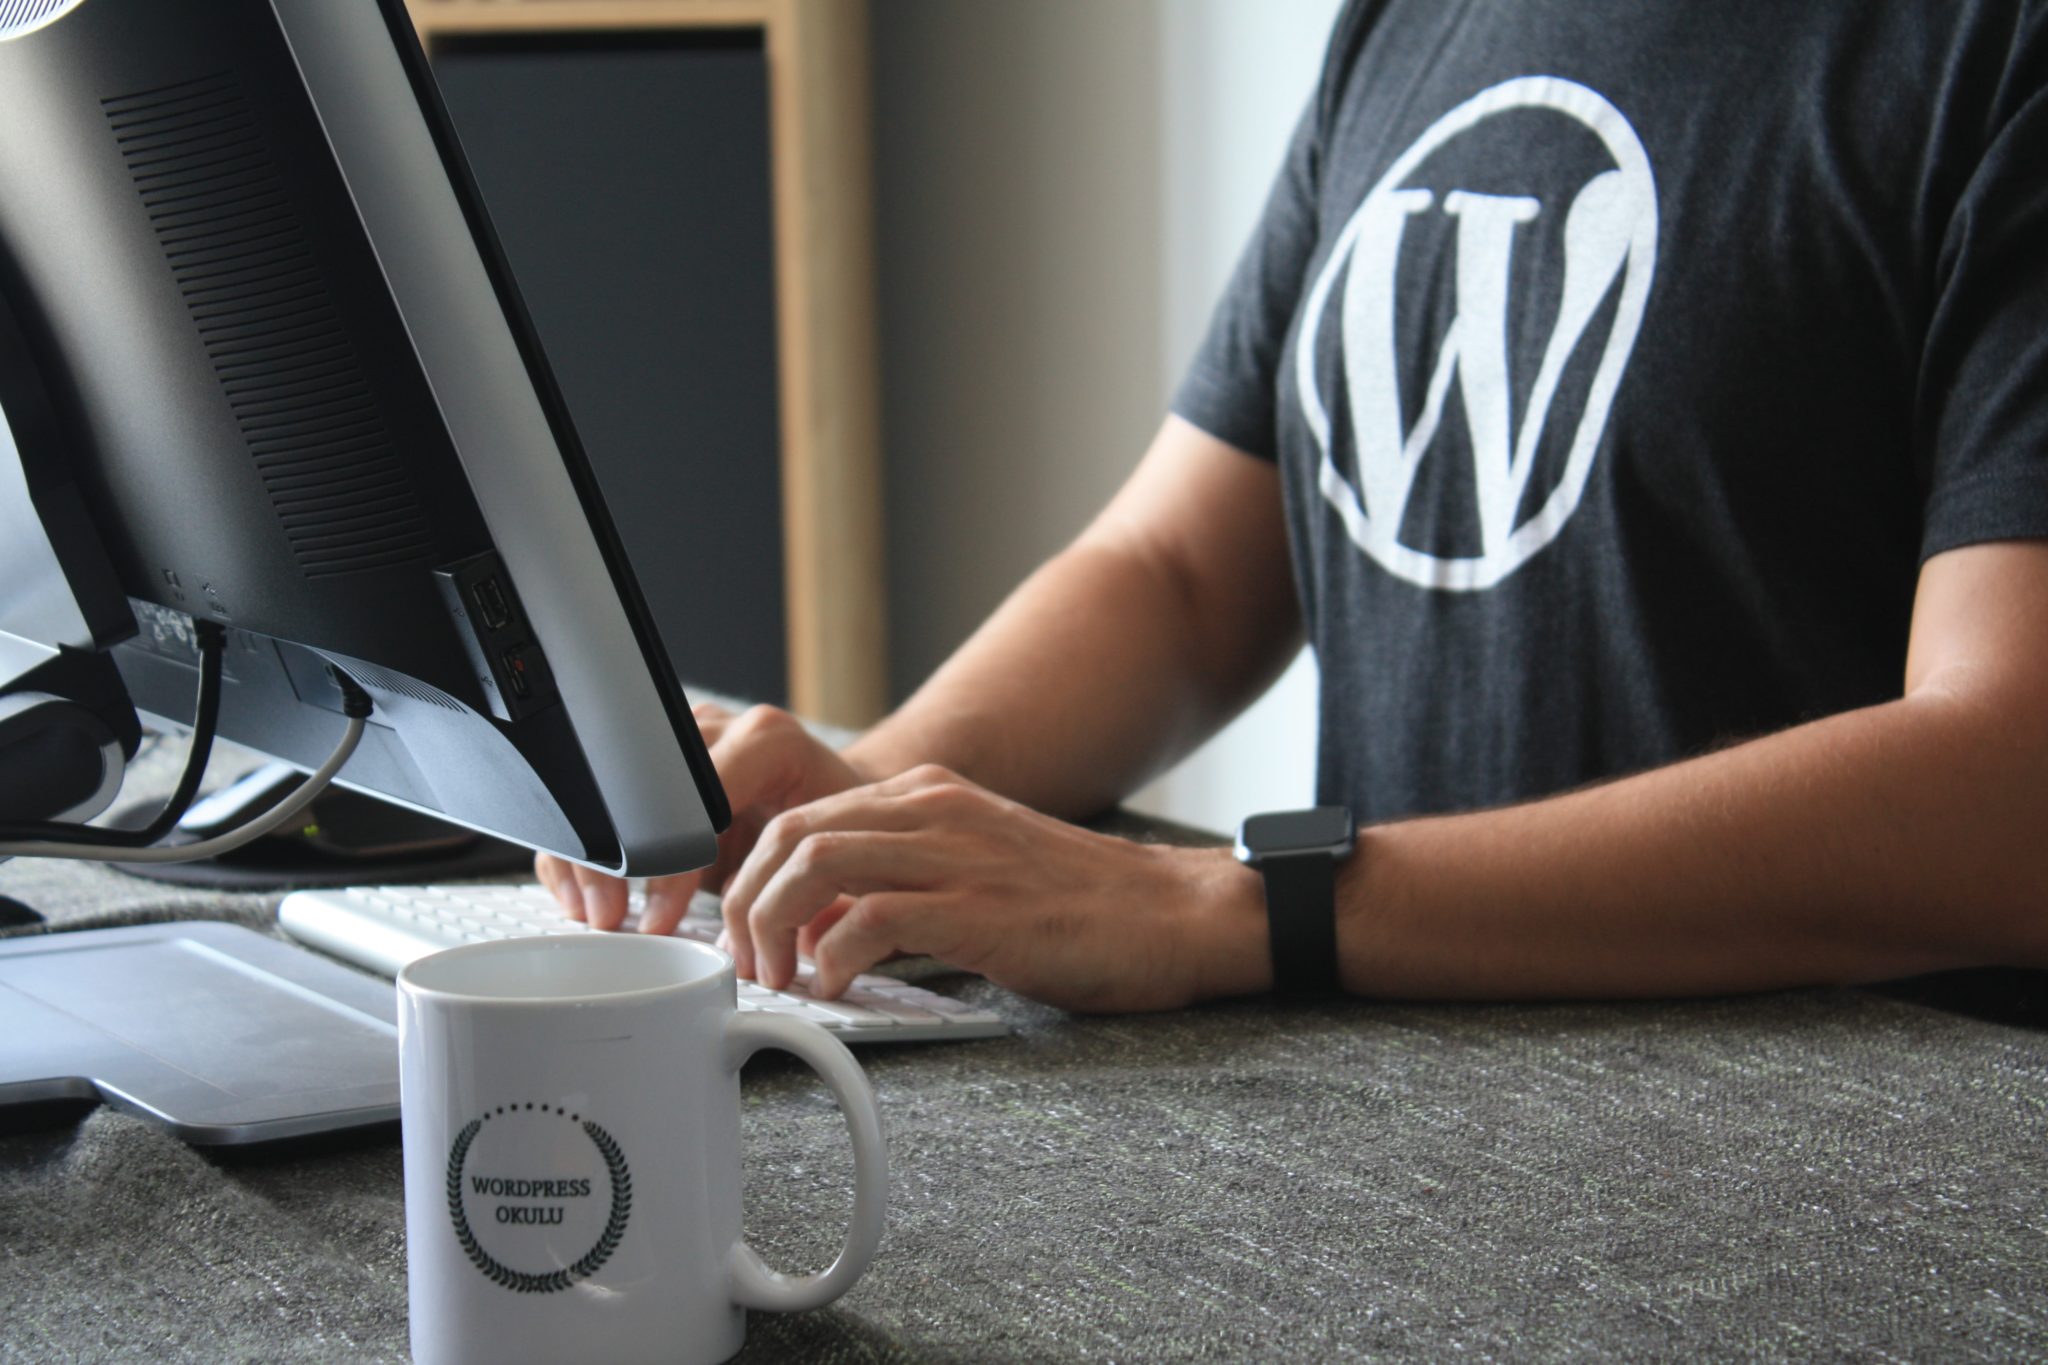 WordPress Developer At Work